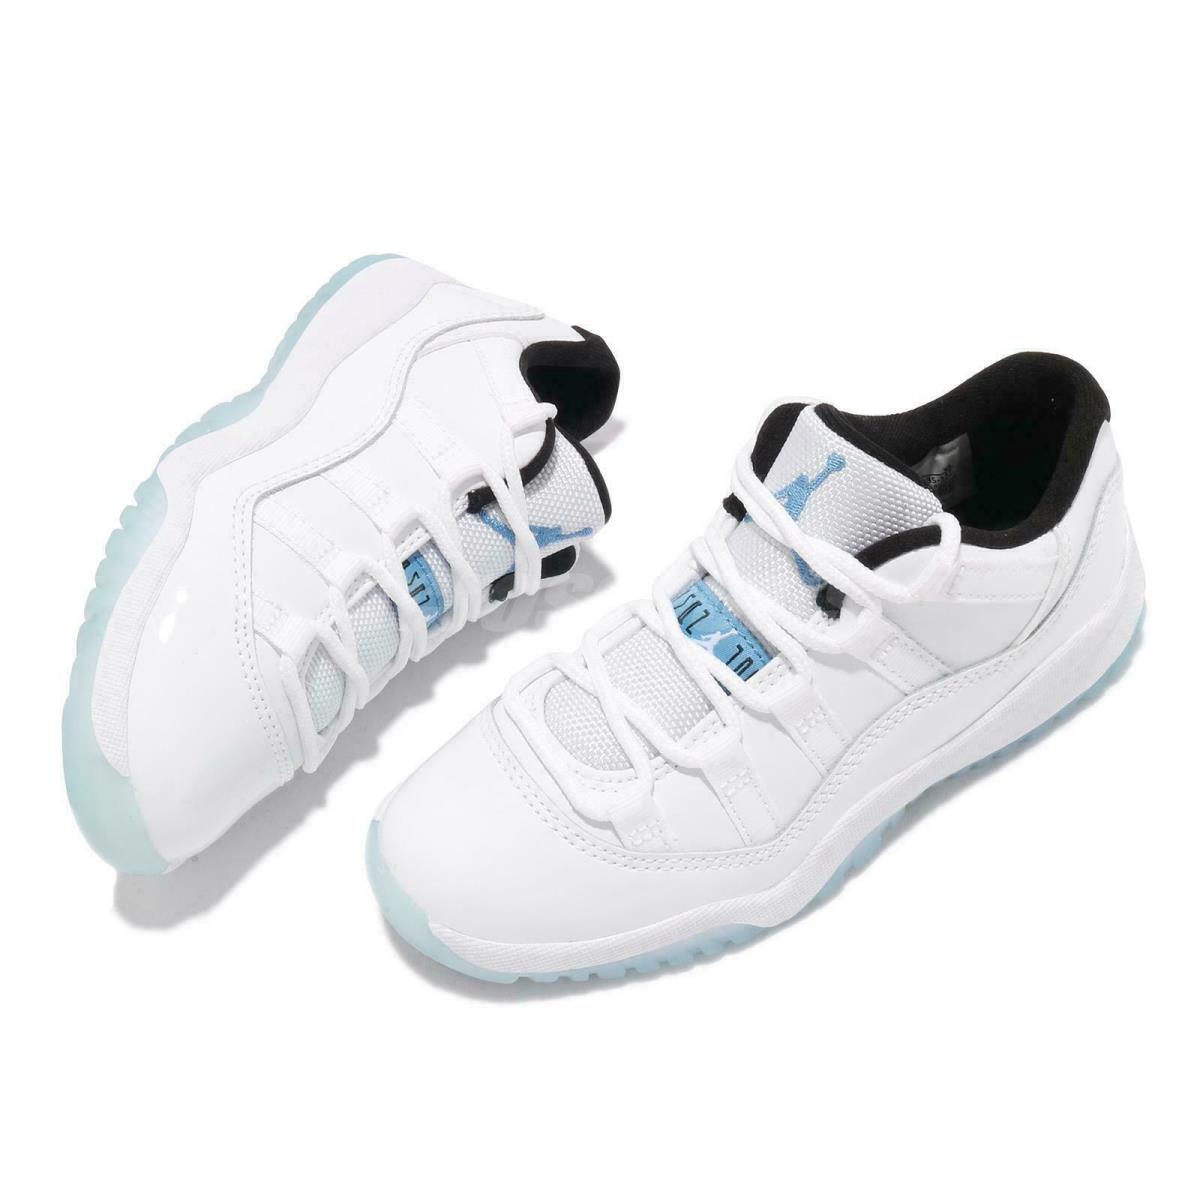 Nike shoes Shoe - White 1